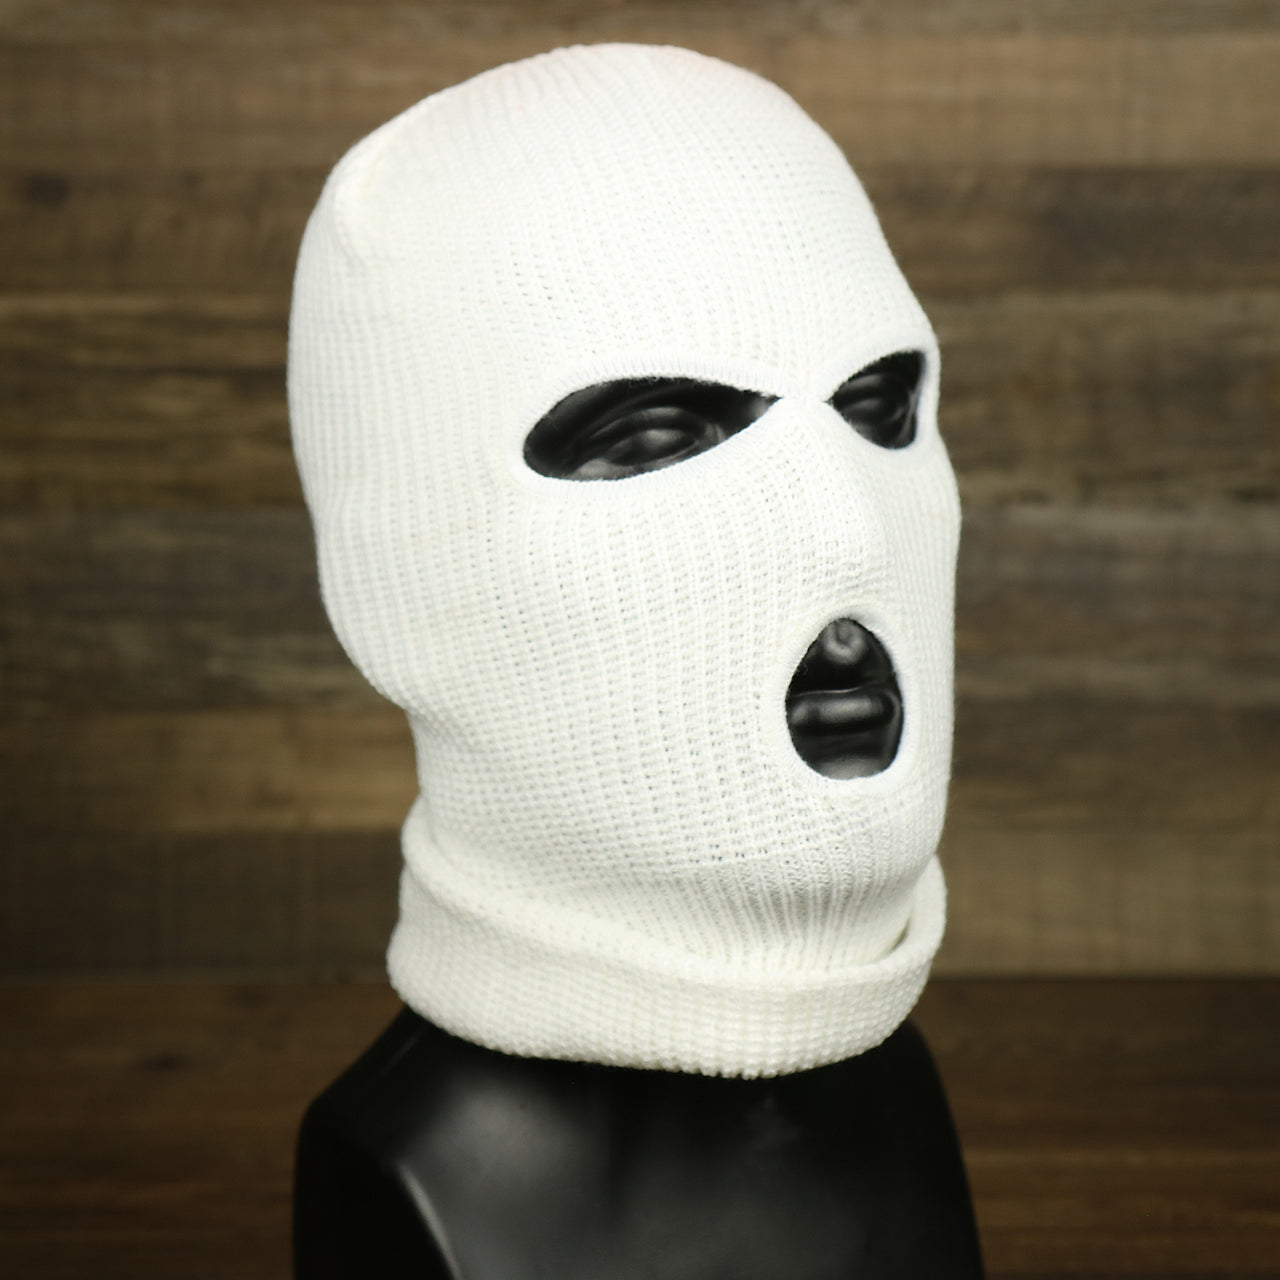 The White Snug Fit Three Hole Balaclava | White Knit Ski Mask pulled down